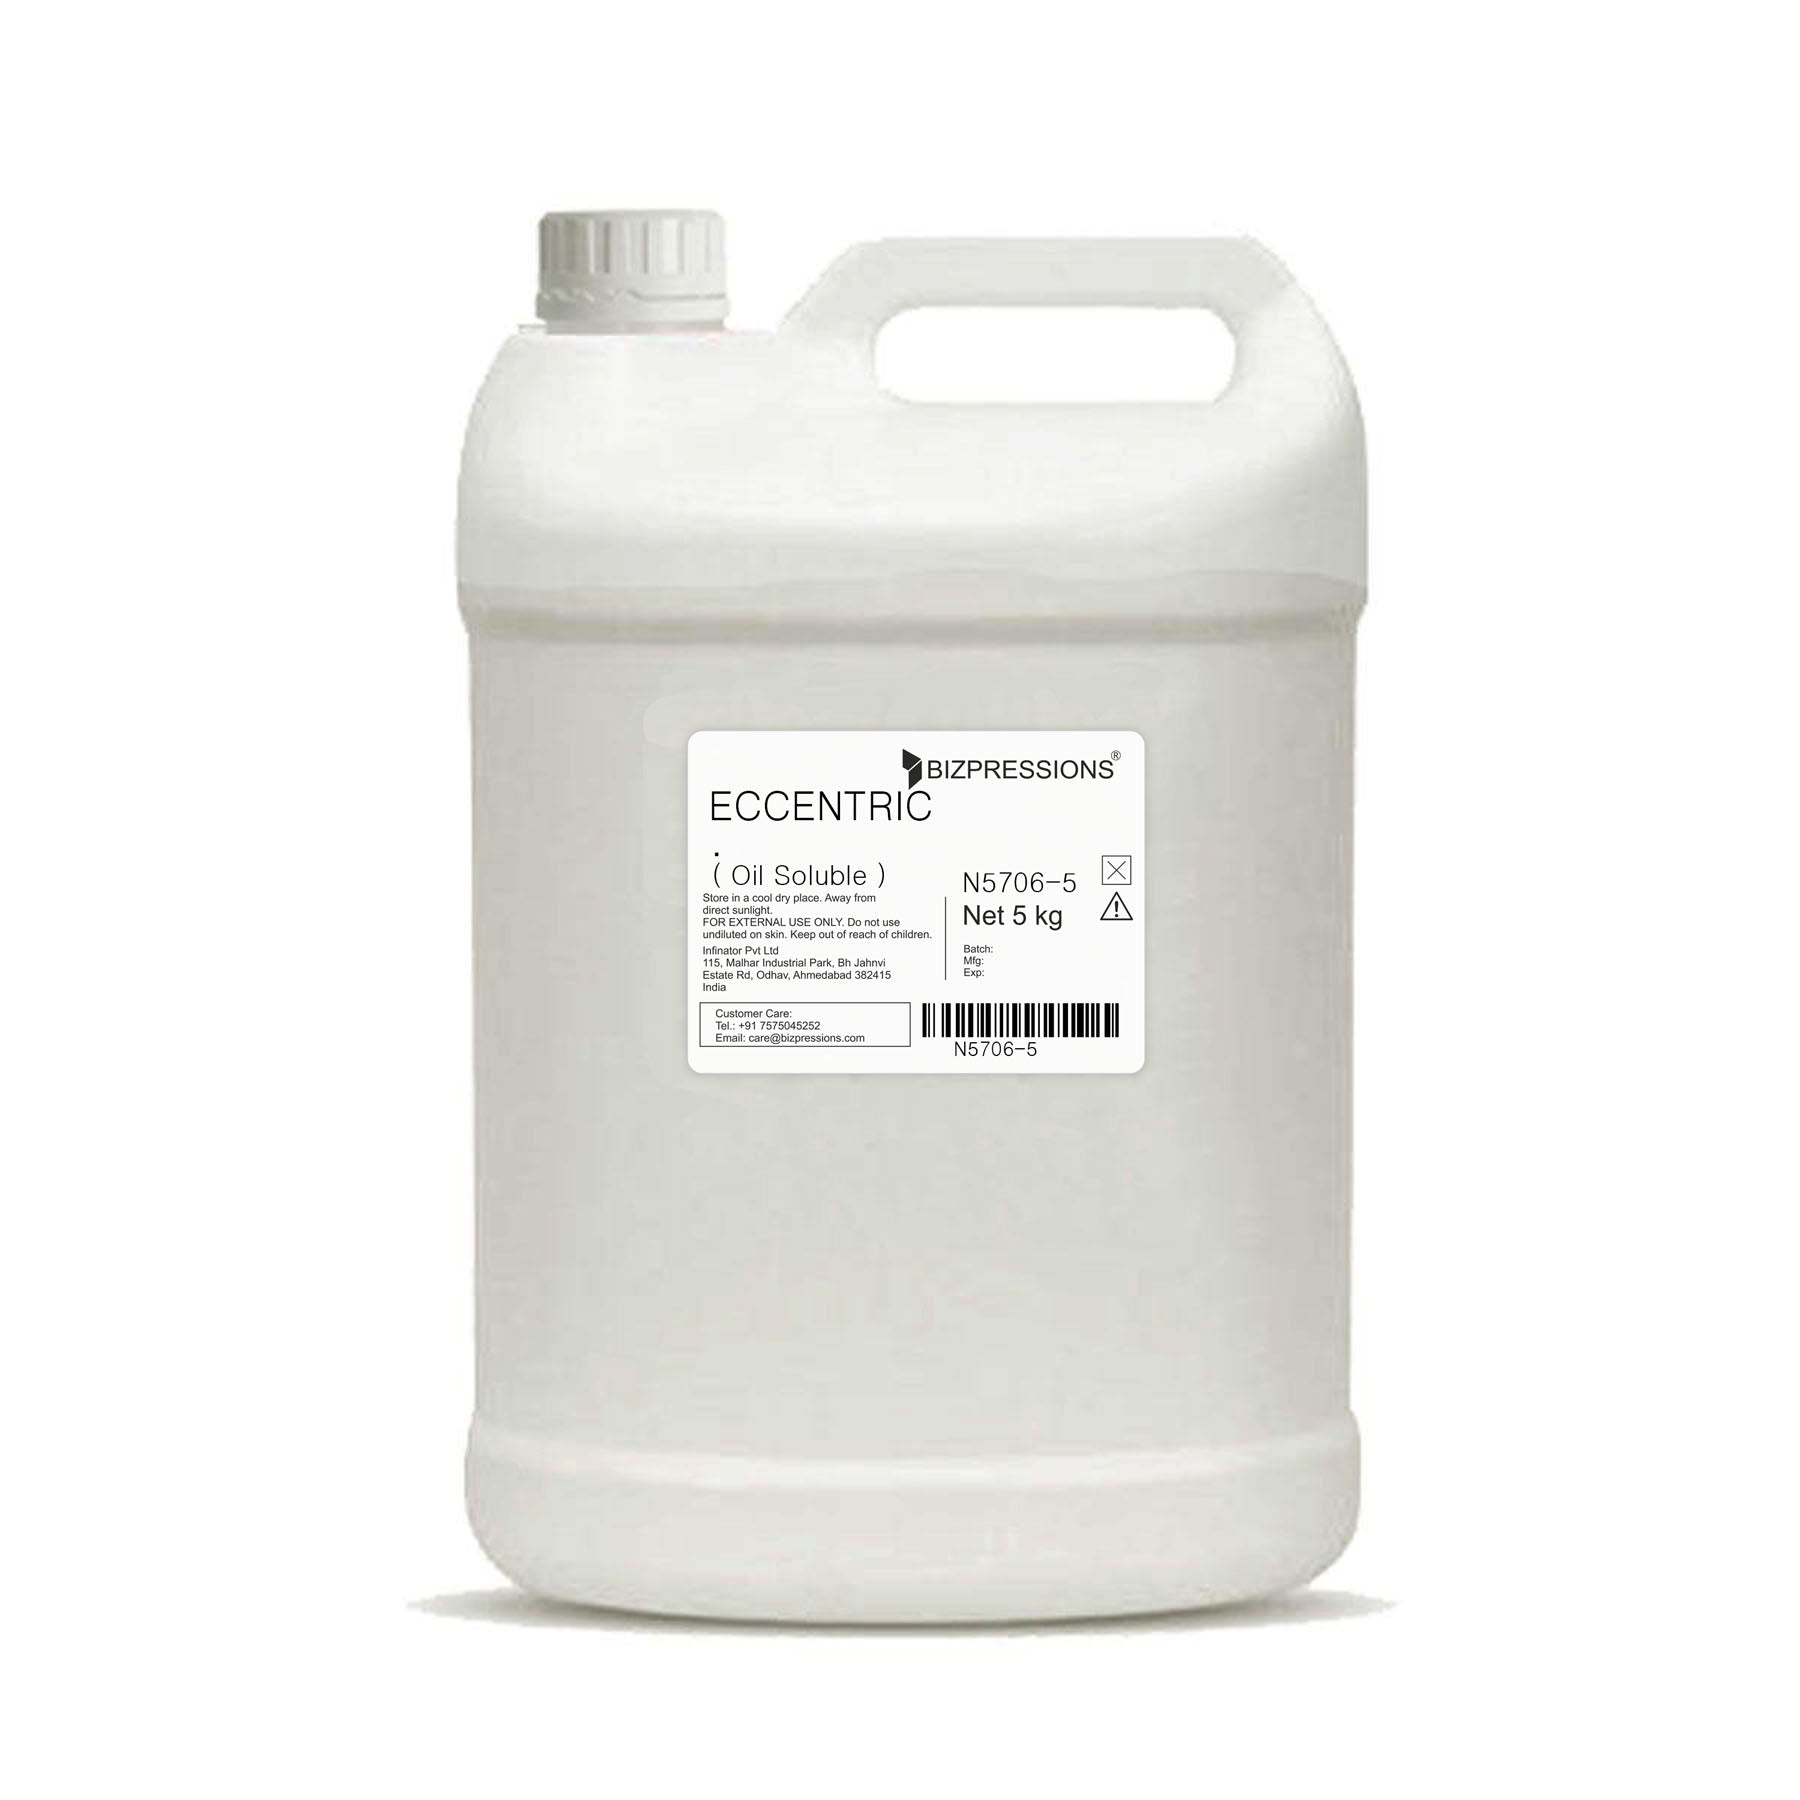 ECCENTRIC - Fragrance ( Oil Soluble ) - 5 kg